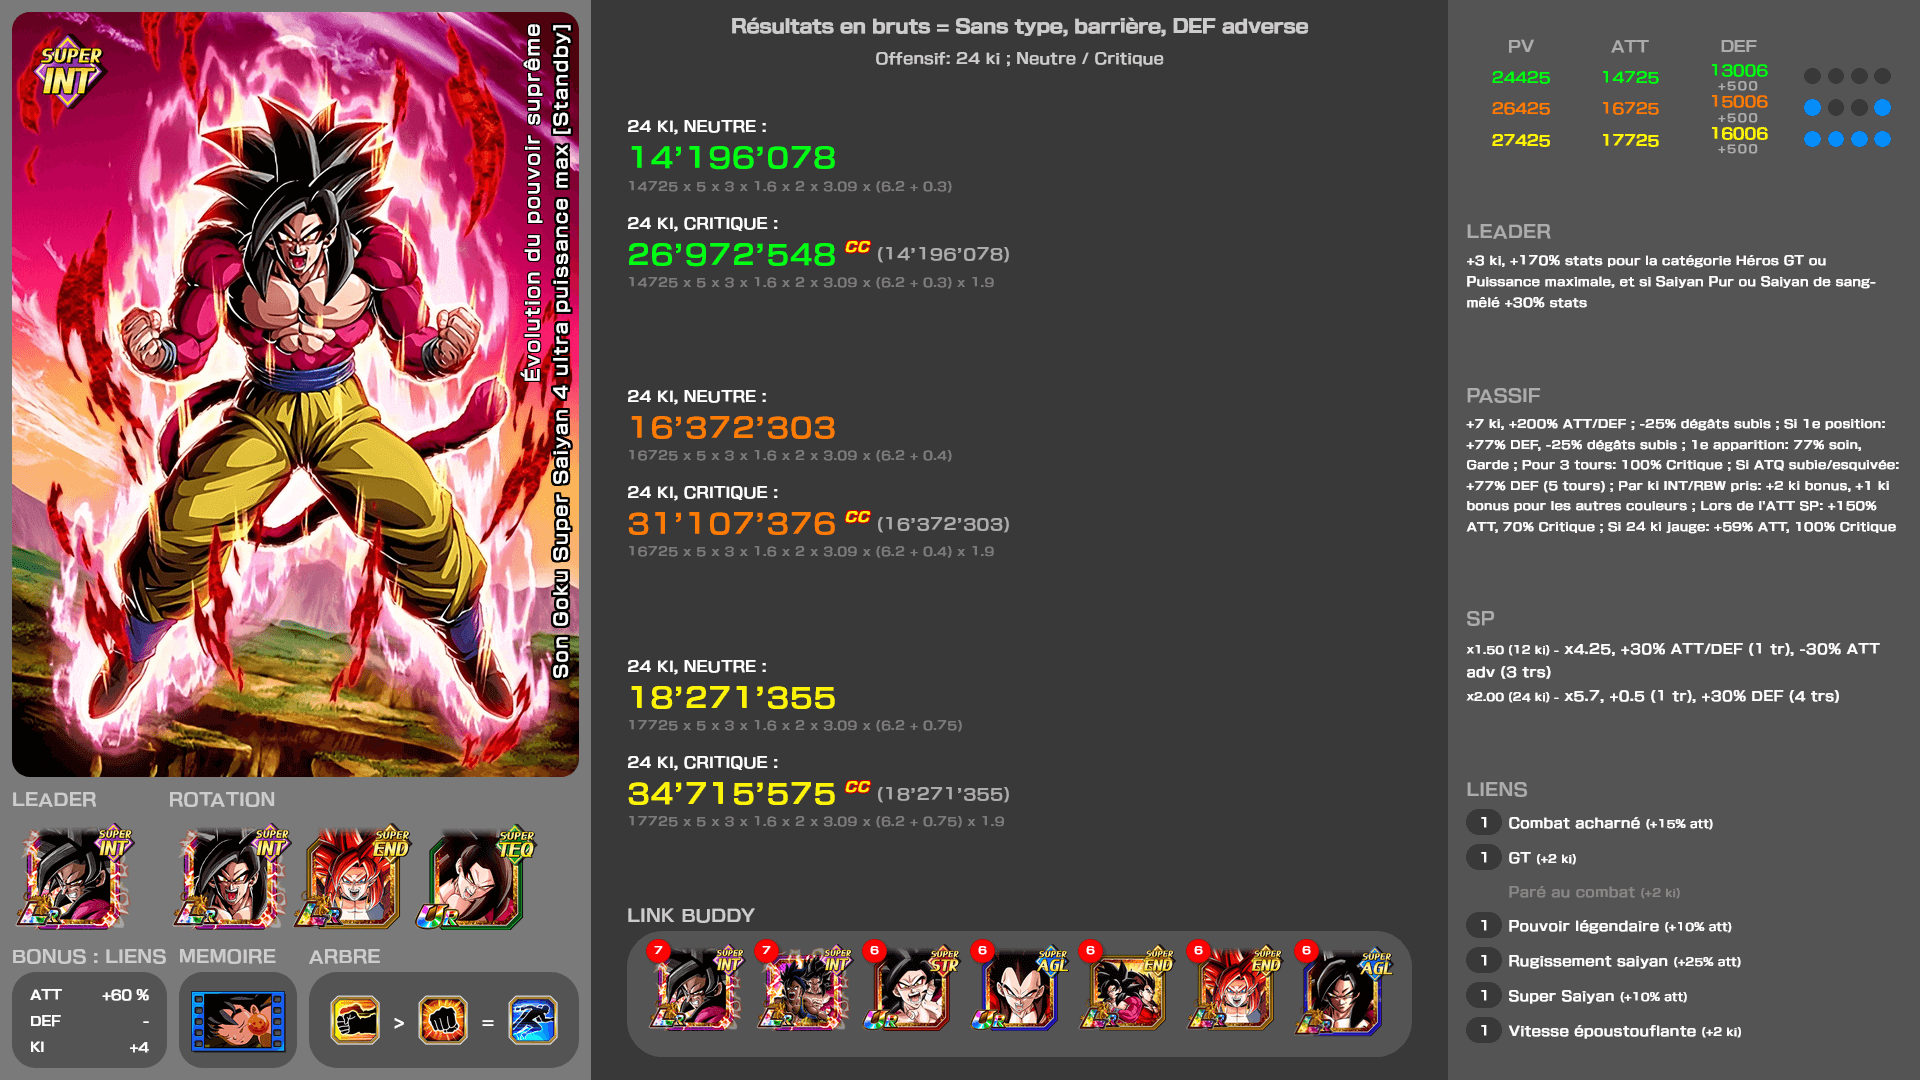 Fiche n°2 Son Goku Super Saiyan 4 ultra puissance max [Standby]Évolution de force ultime